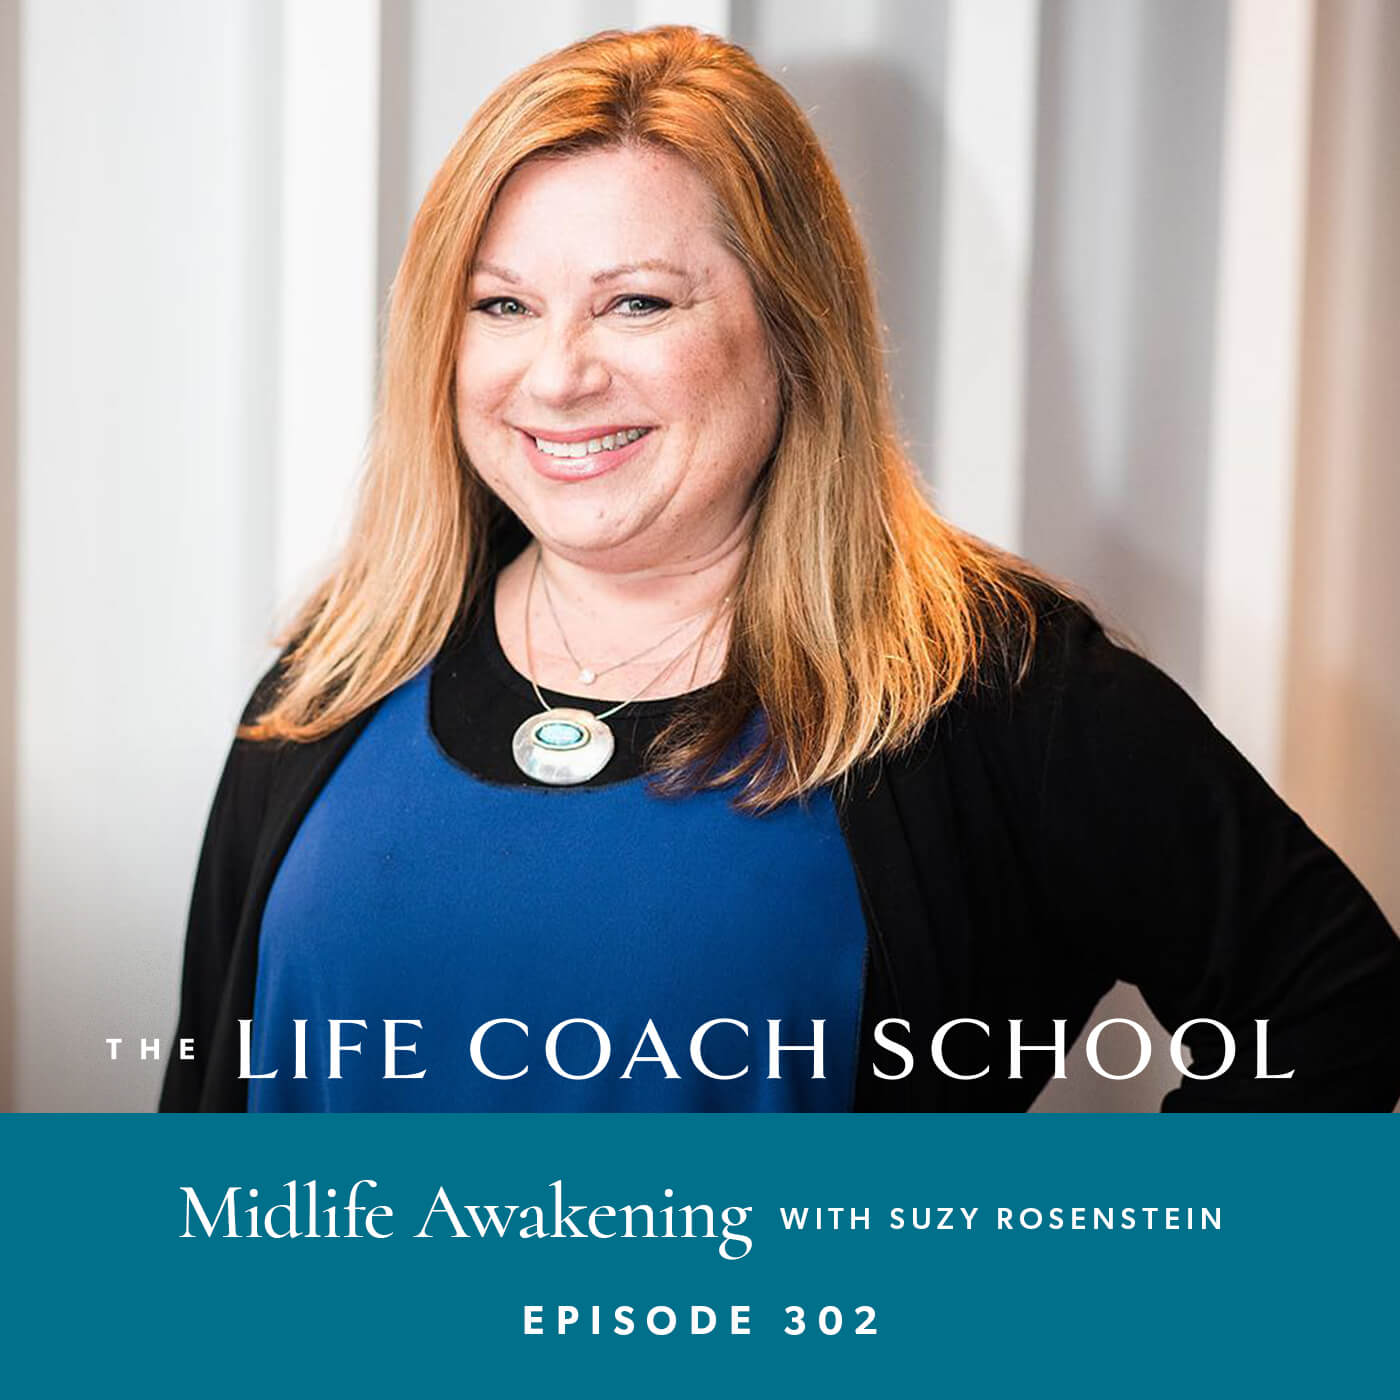 The Life Coach School Podcast with Brooke Castillo | Episode 302 | Midlife Awakening with Suzy Rosenstein